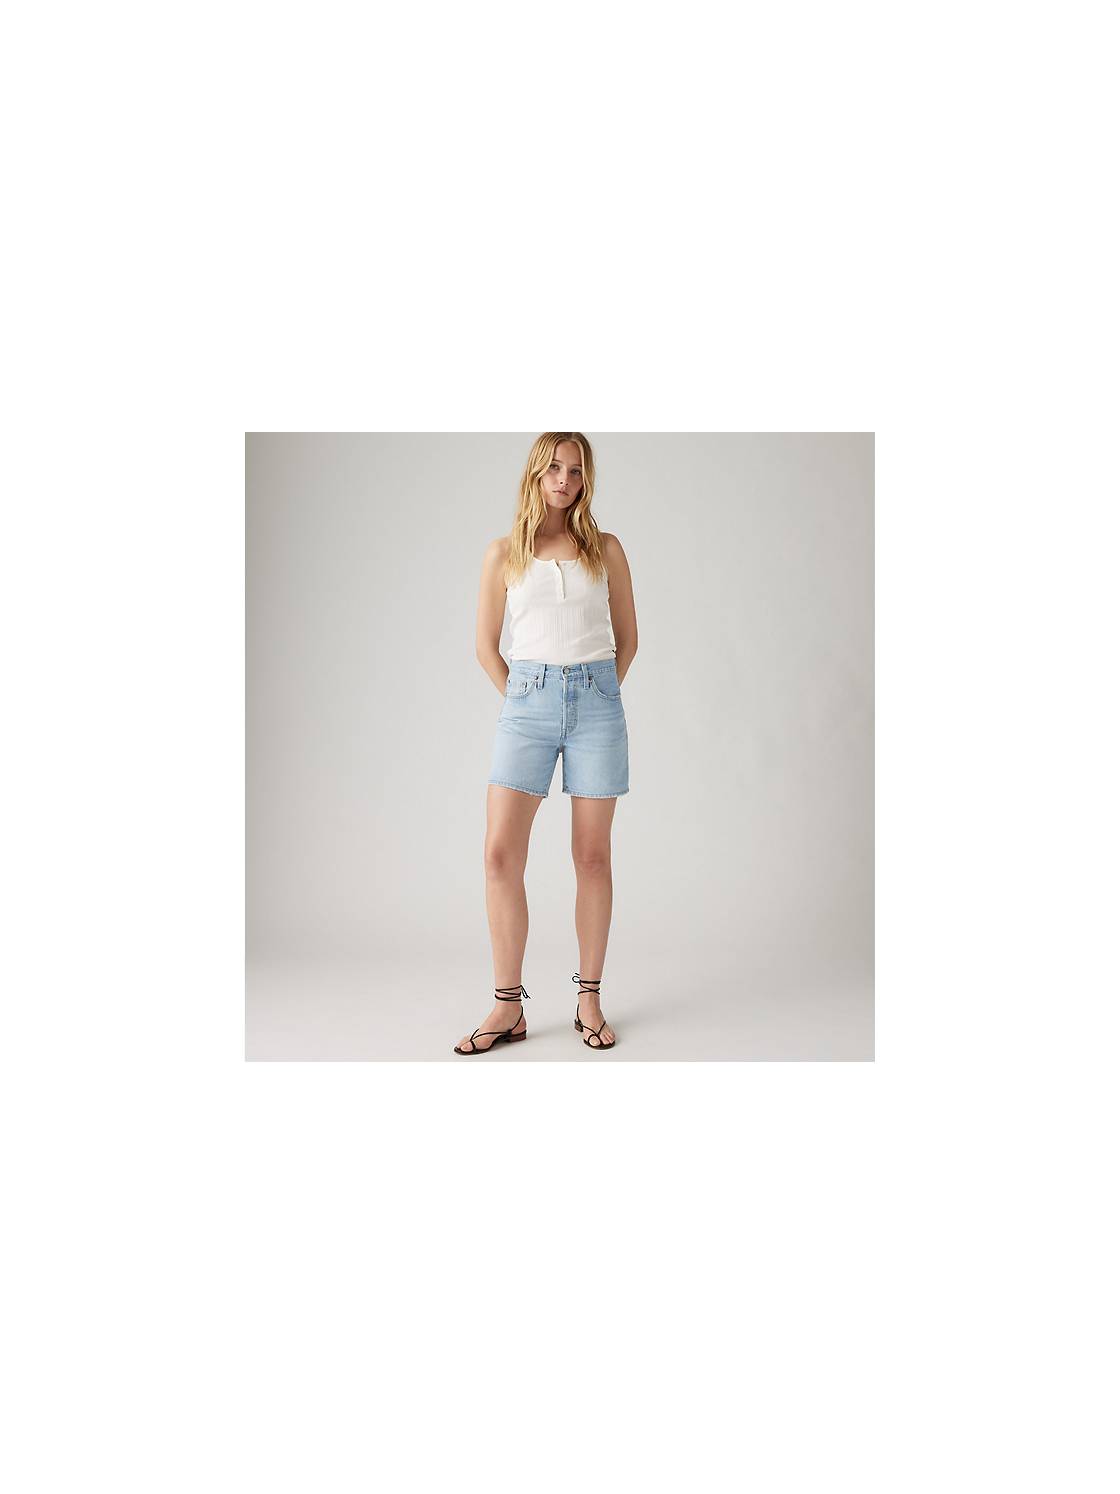 Jean Shorts - Shop This Season's Women's Shorts